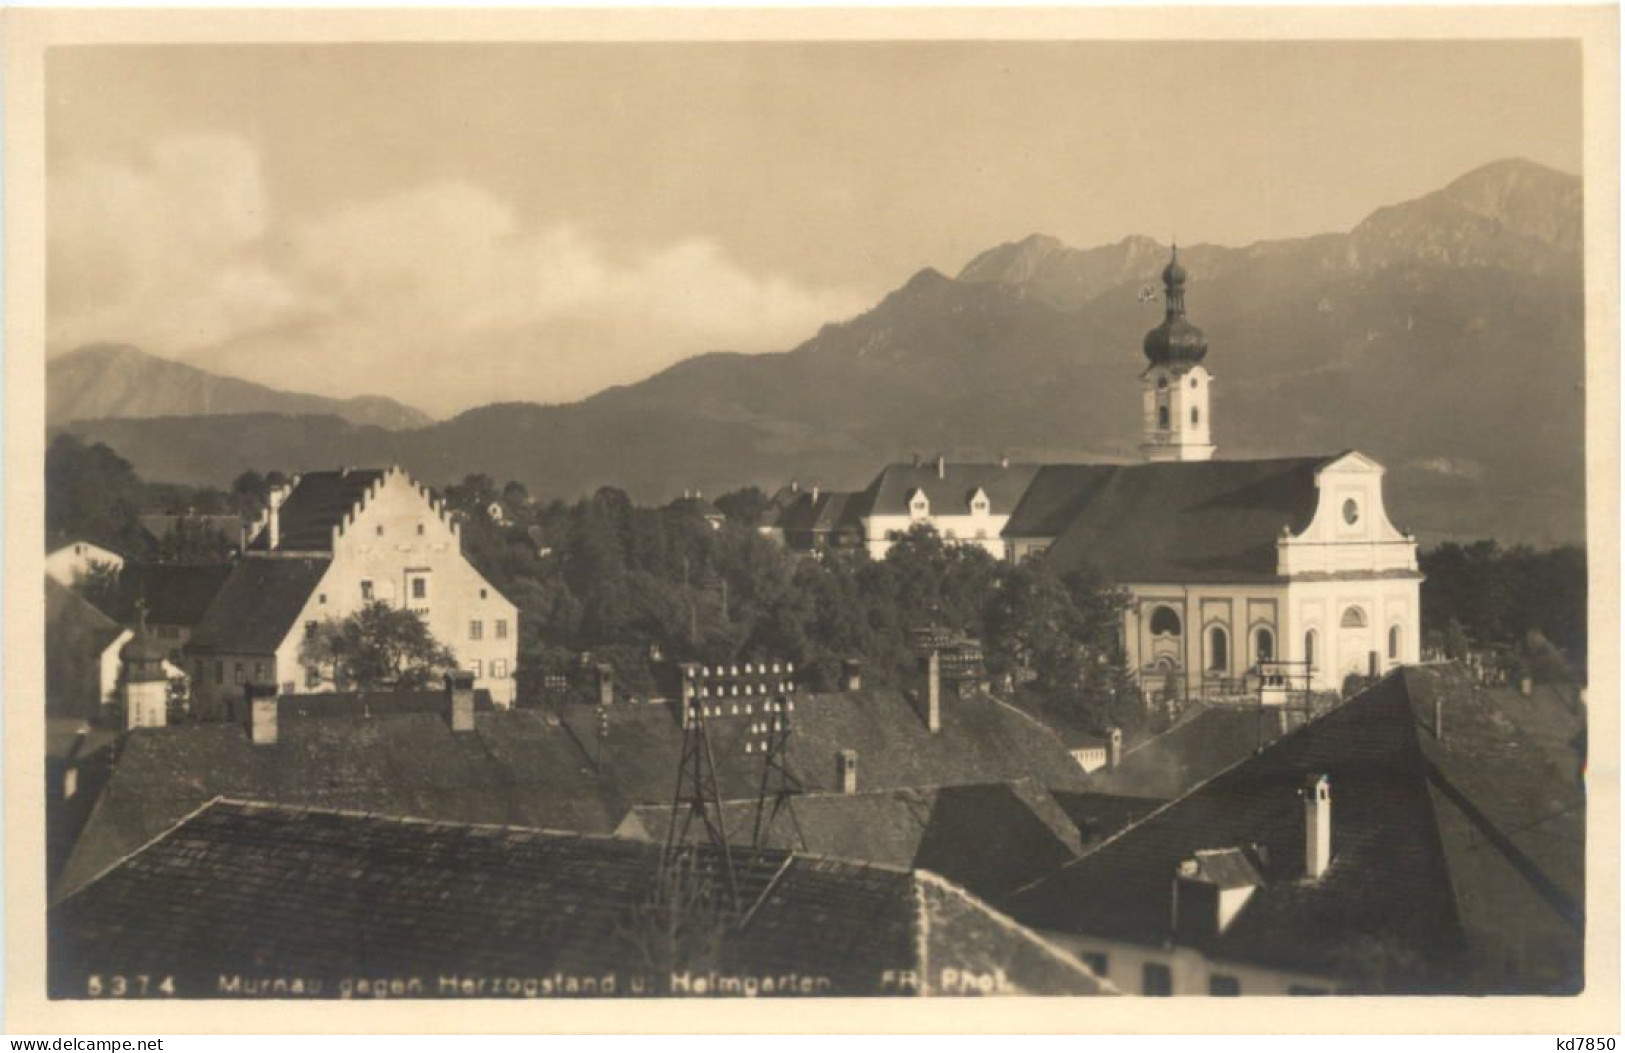 Murnau - Garmisch-Partenkirchen